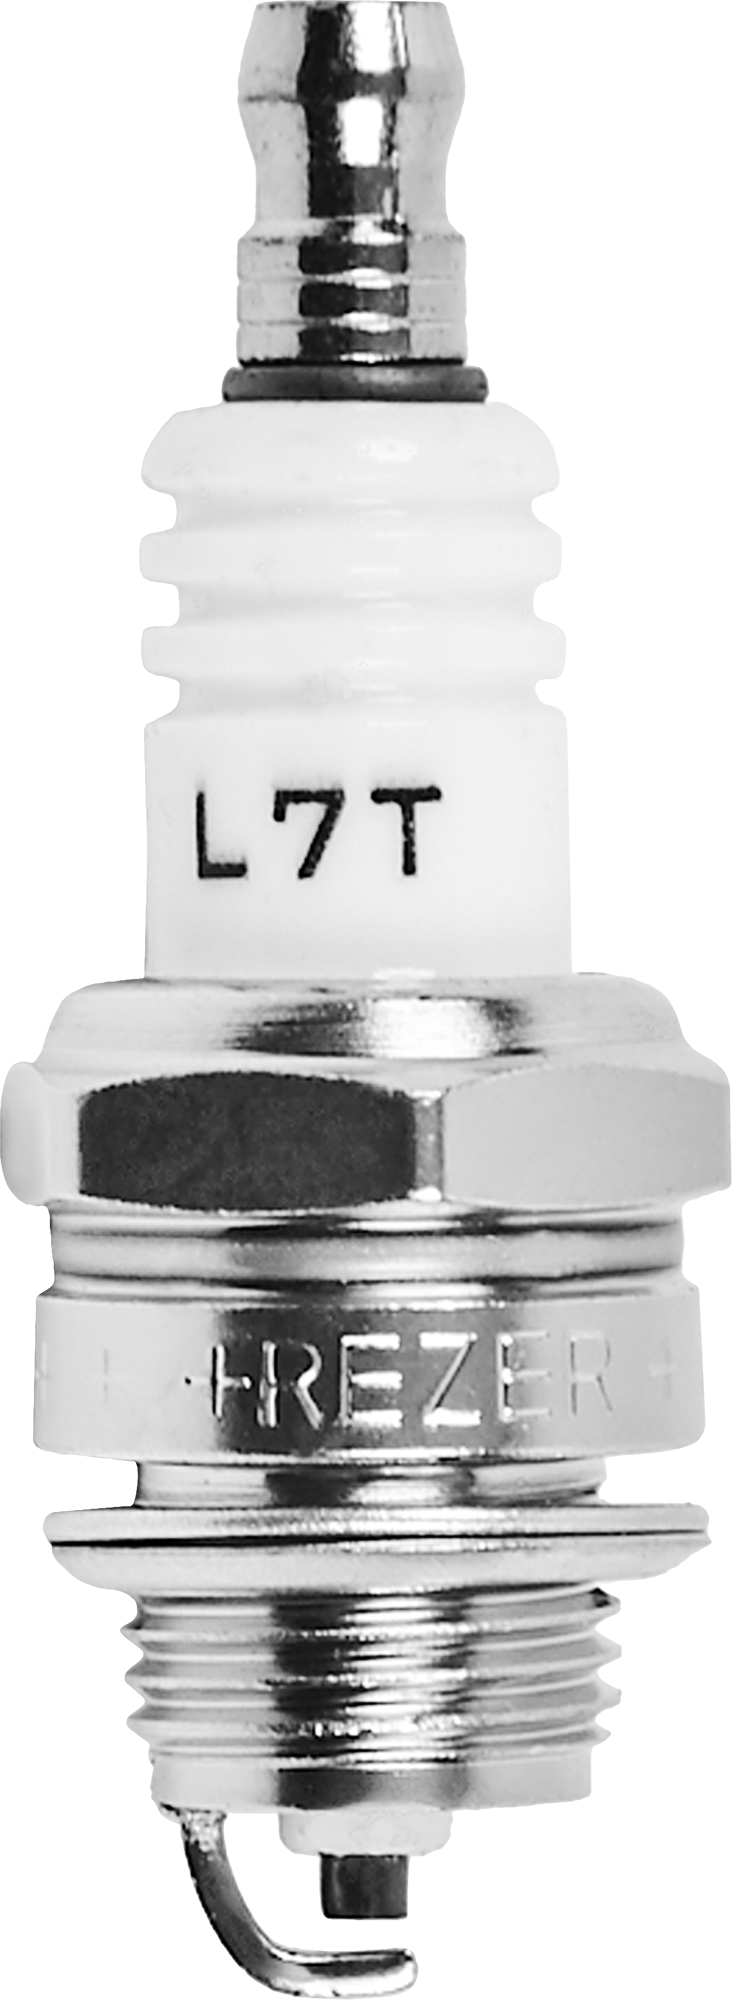  зажигания Rezer L7T ️  по цене 86 ₽/шт.  с .